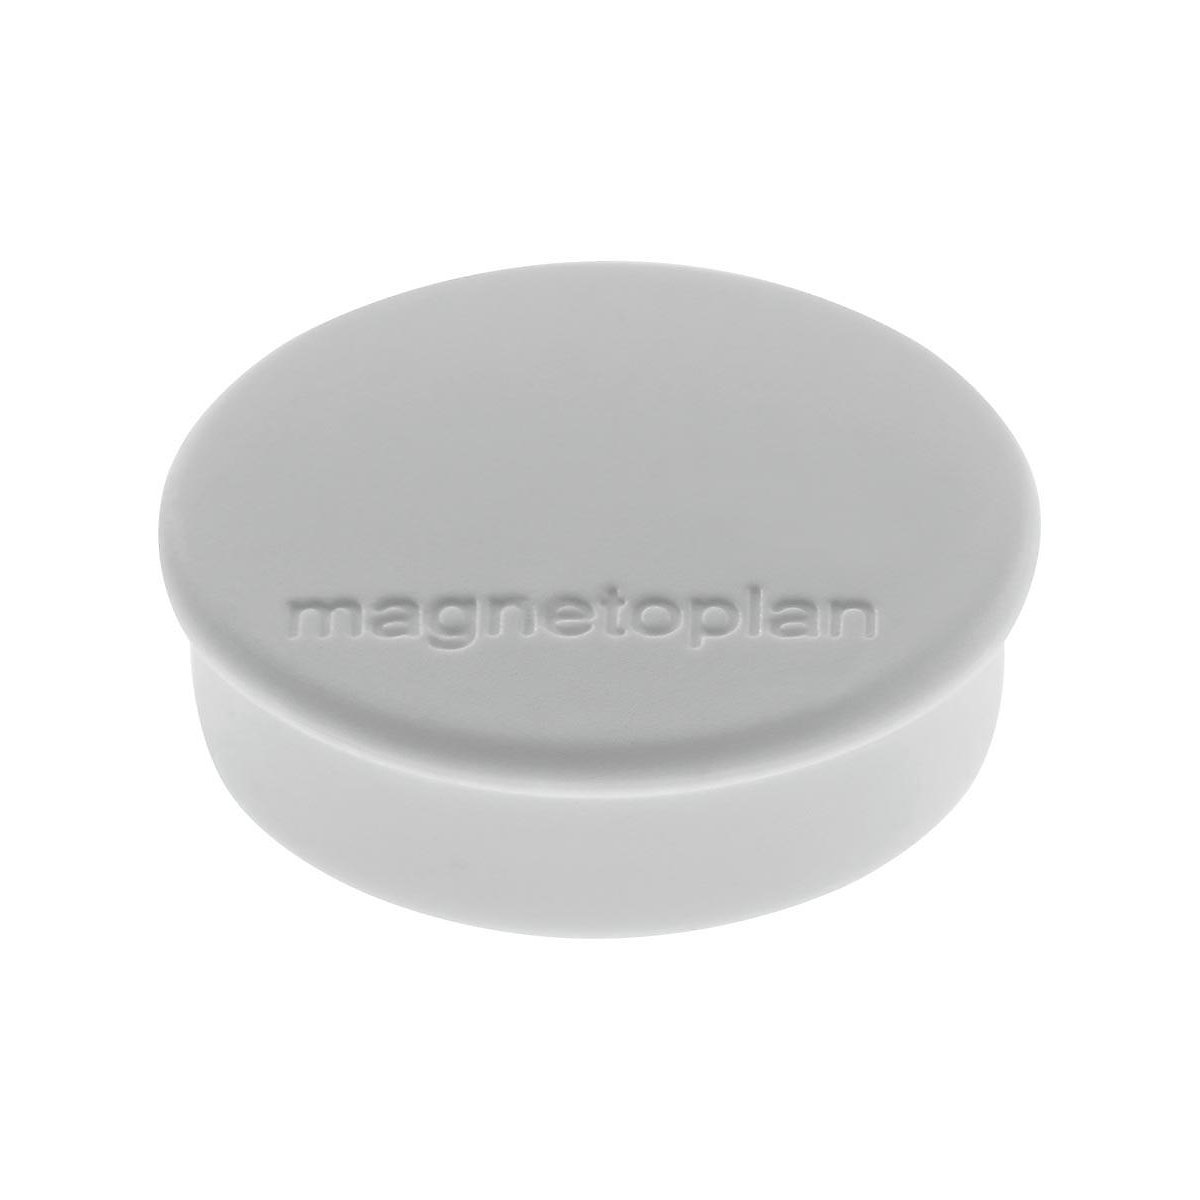 Magnet DISCOFIX HOBBY magnetoplan, Ø 25 mm, VE 100 Stk, grau-10